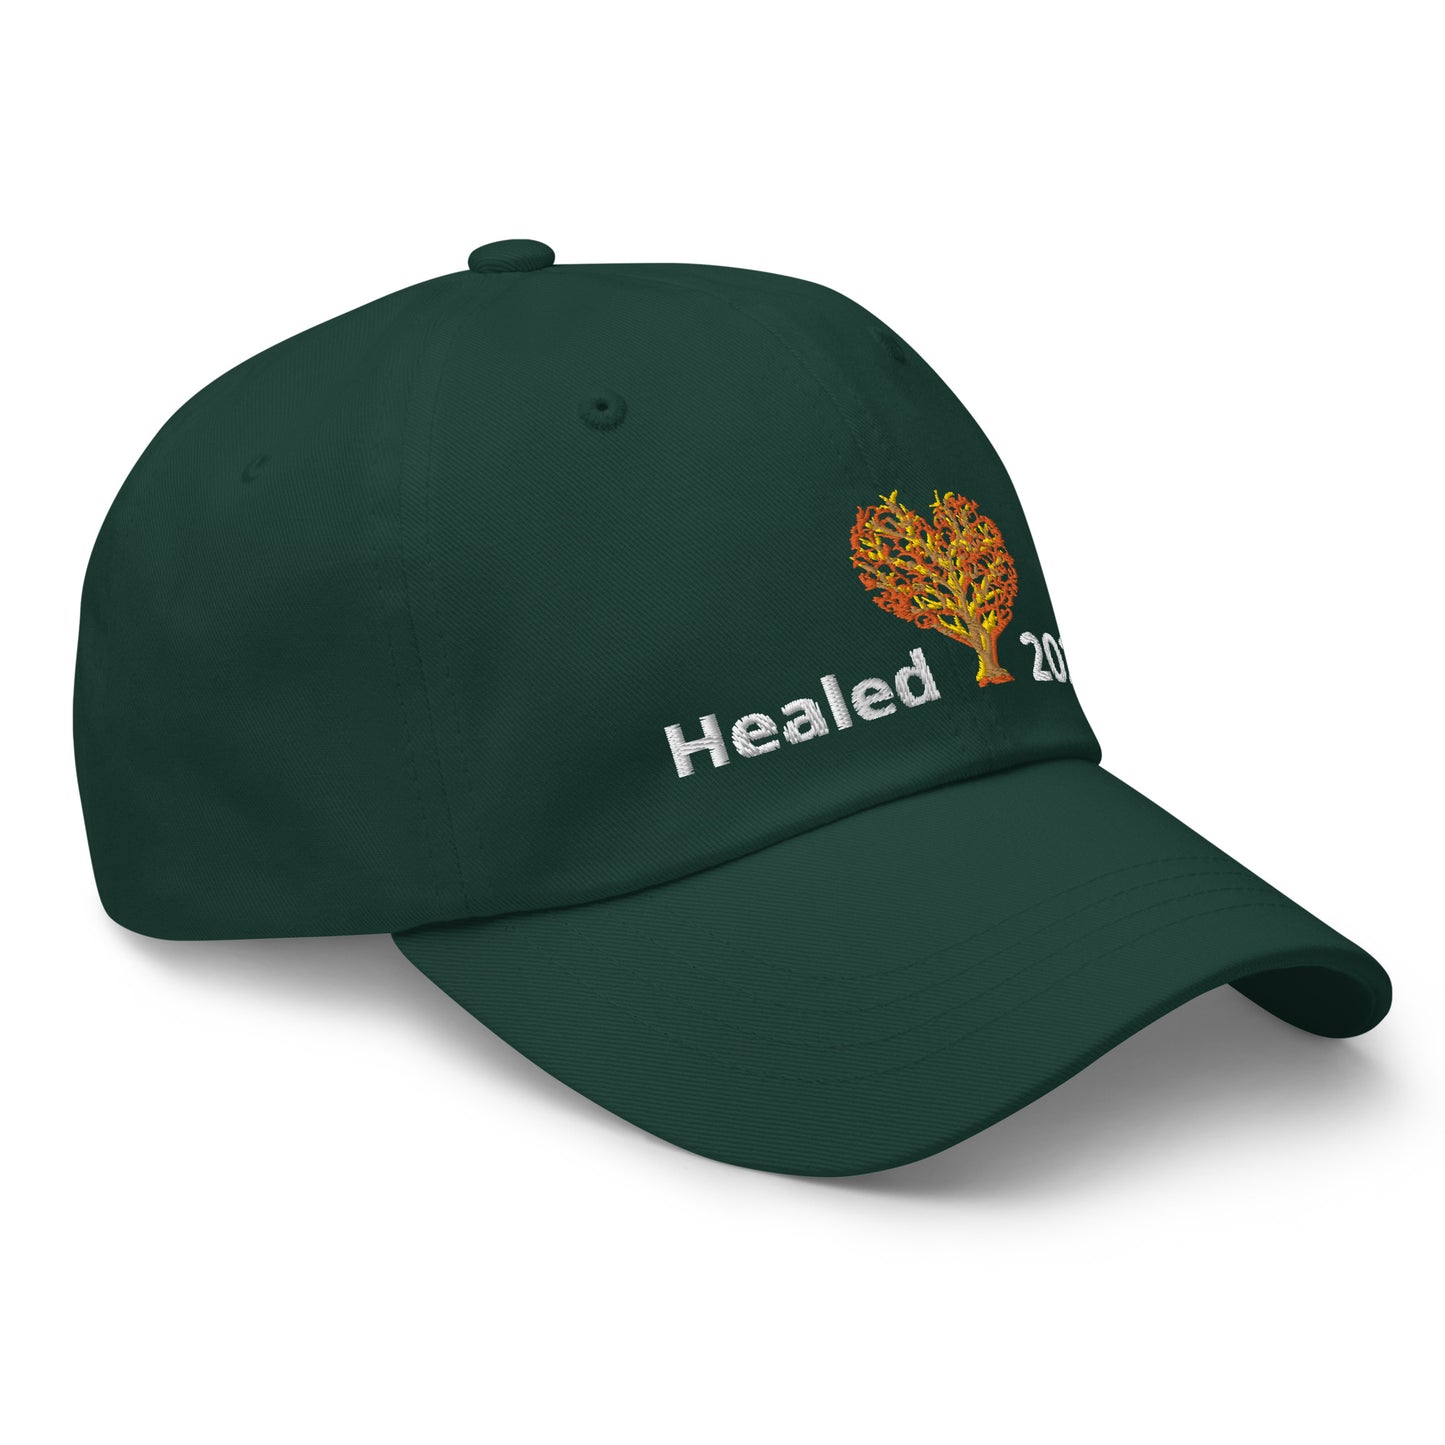 "Healed" Declaration Unisex Hat